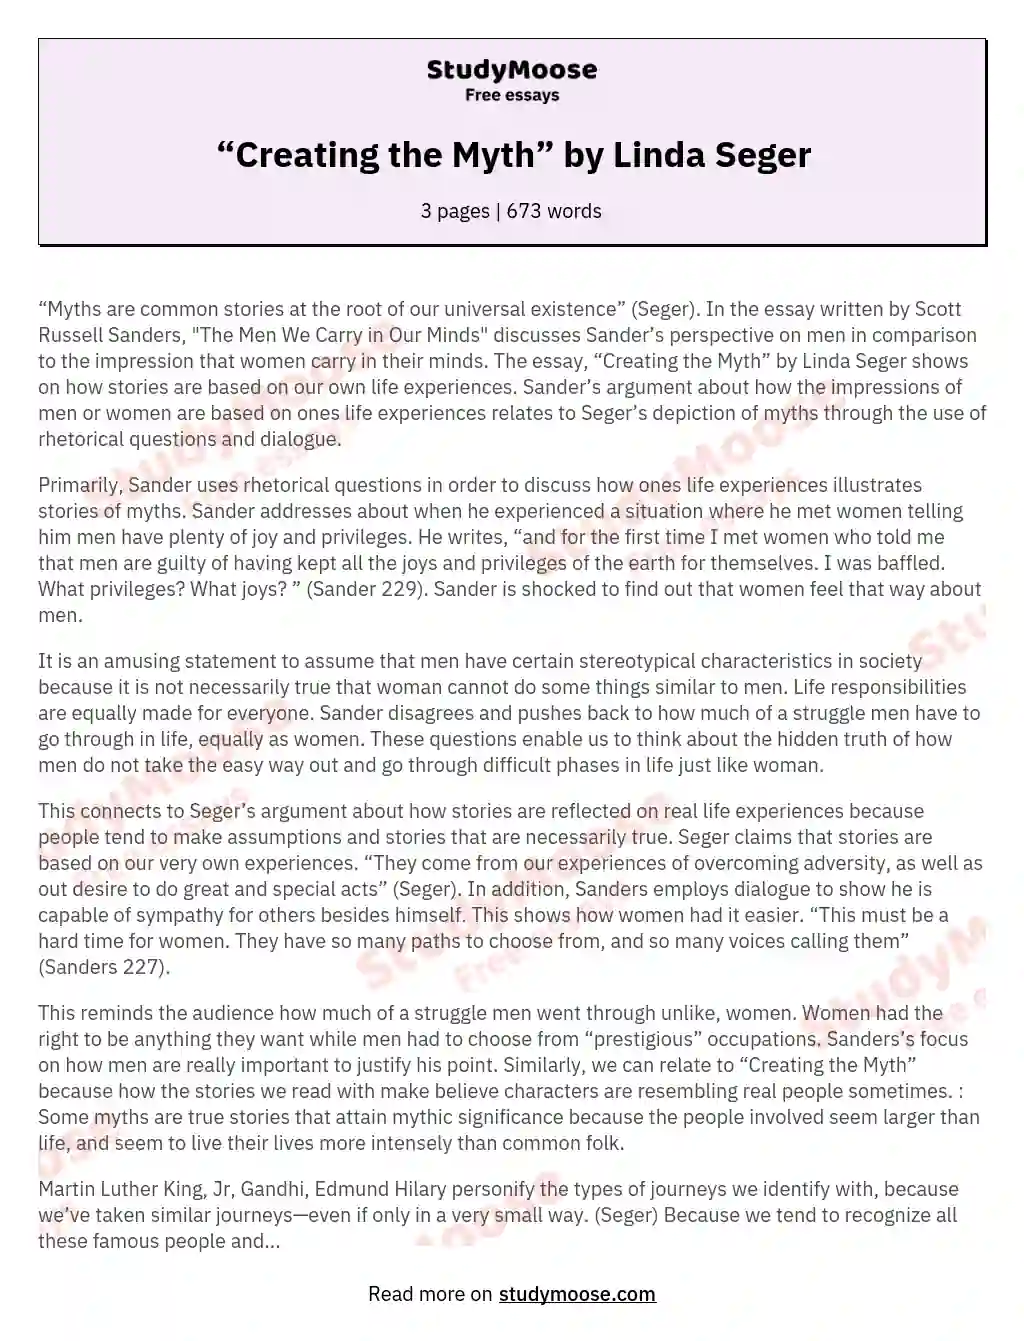 “Creating the Myth” by Linda Seger essay